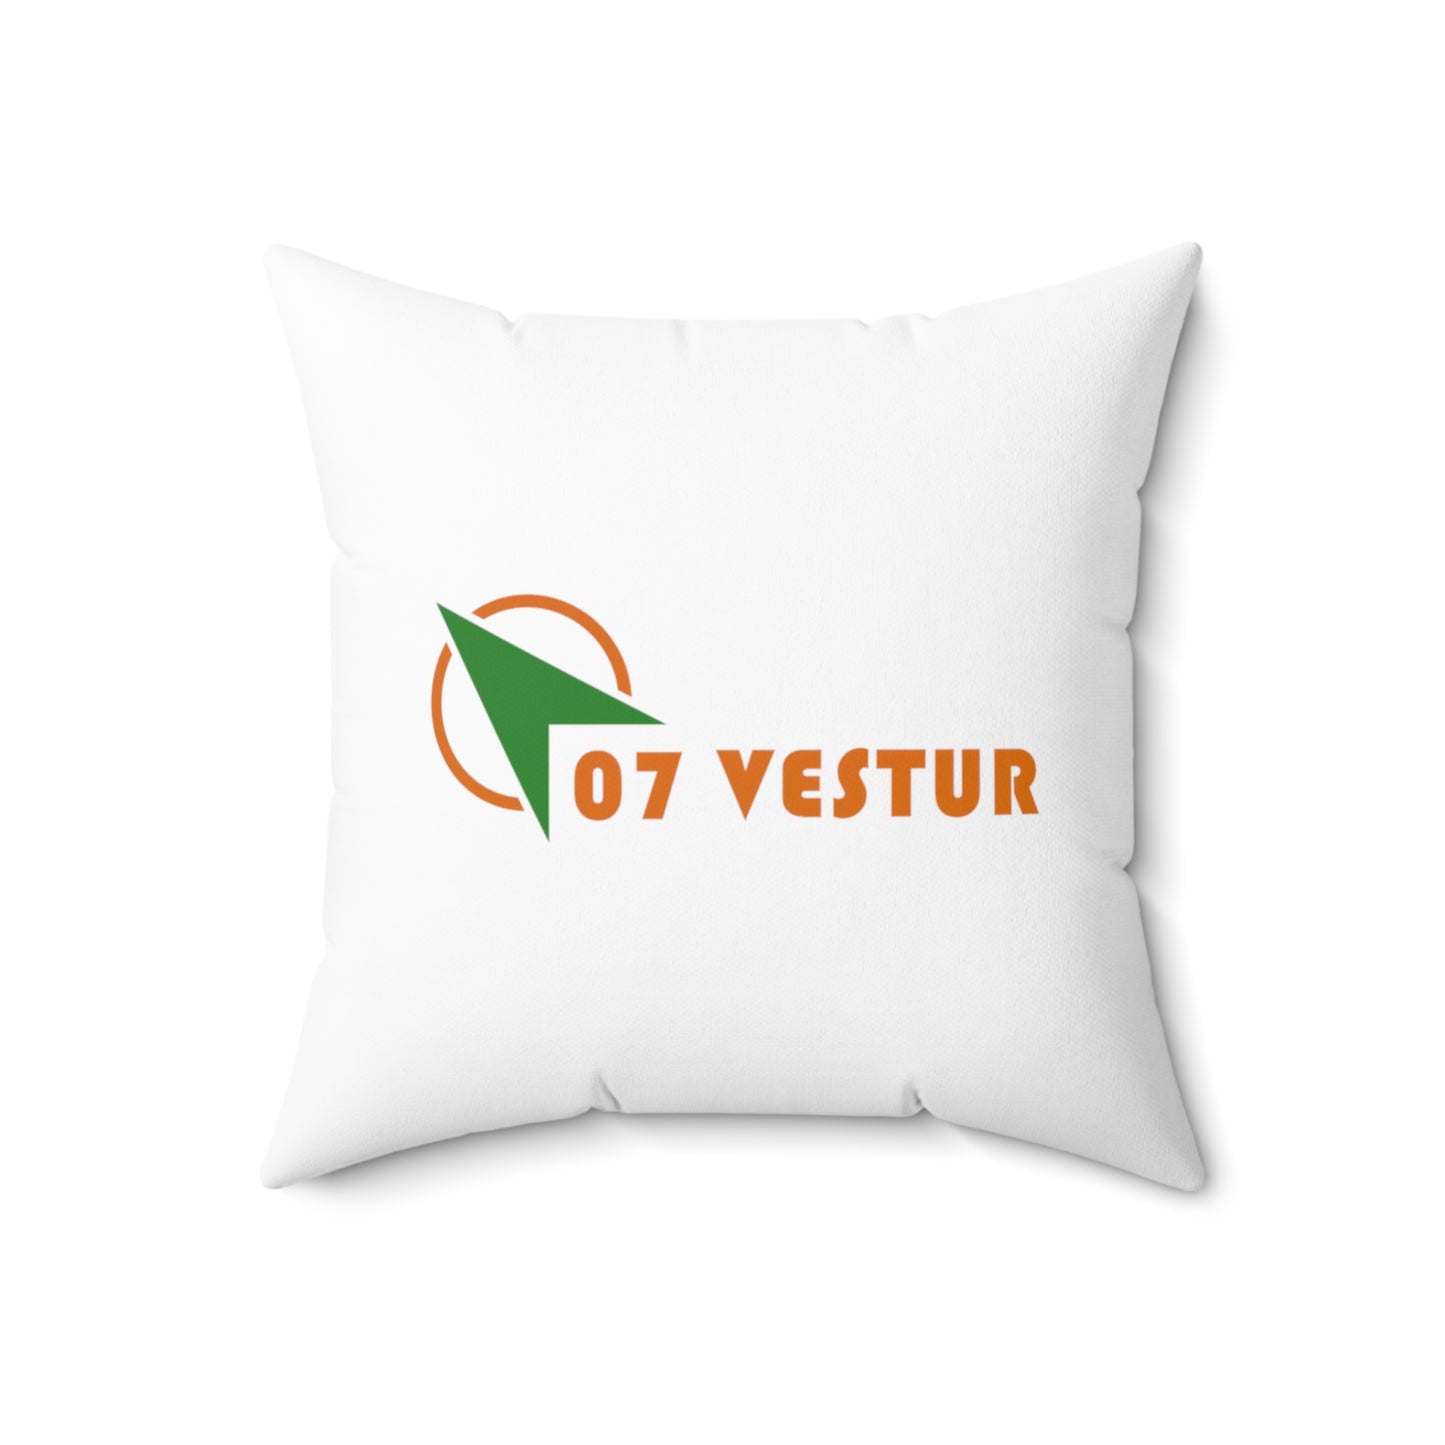 07 Vestur Throw Pillow